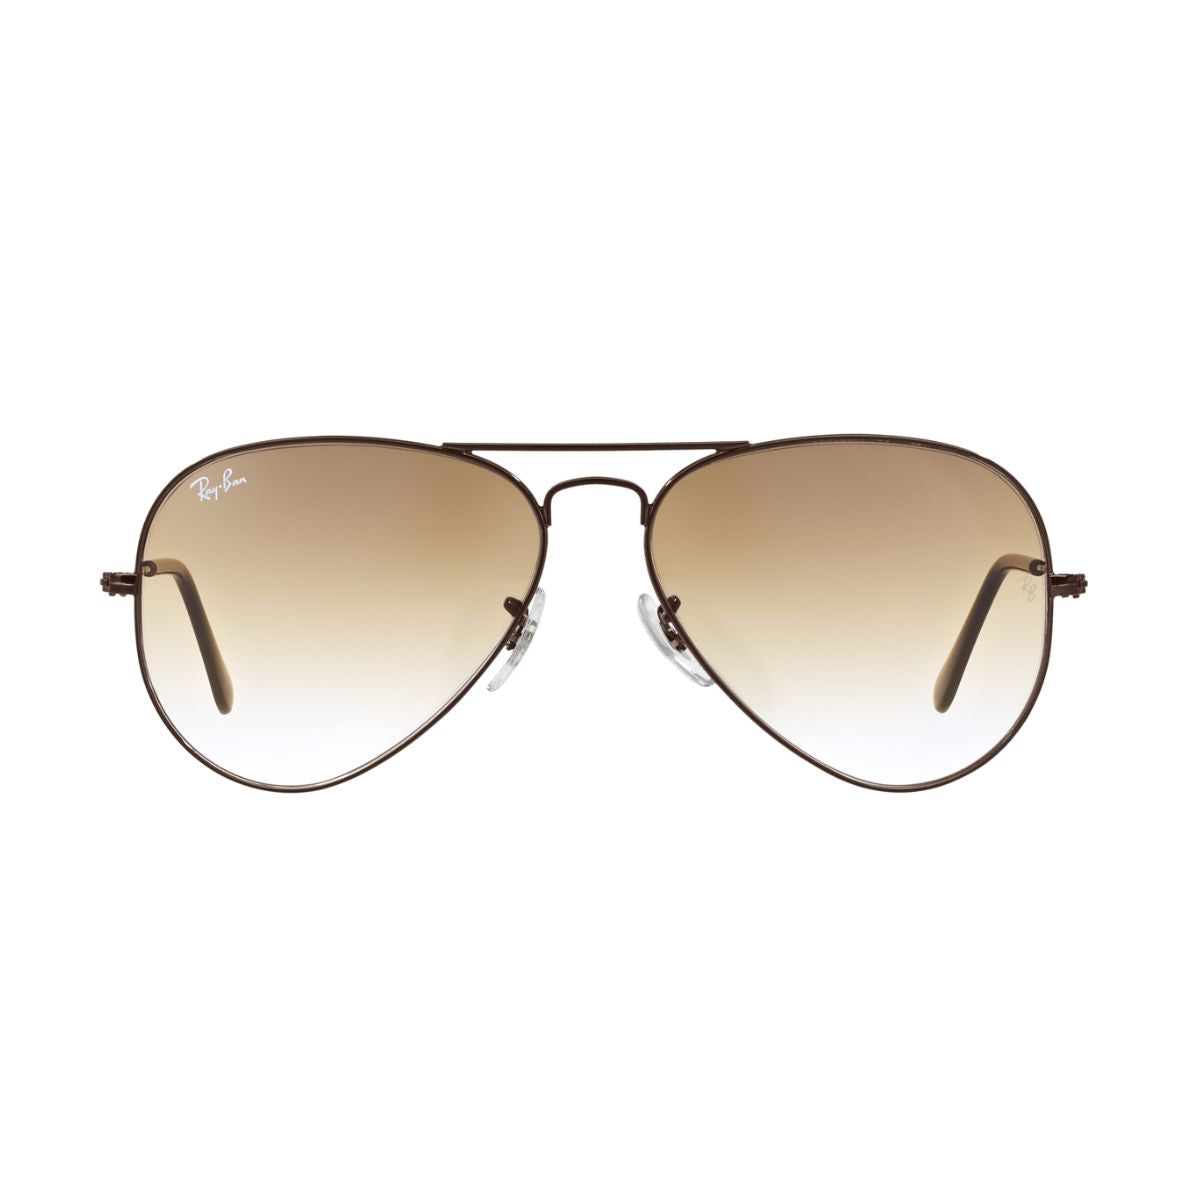 "Rayban 3025 014/51 Aviator Frame UV Sunglasses For Men At Optorium"